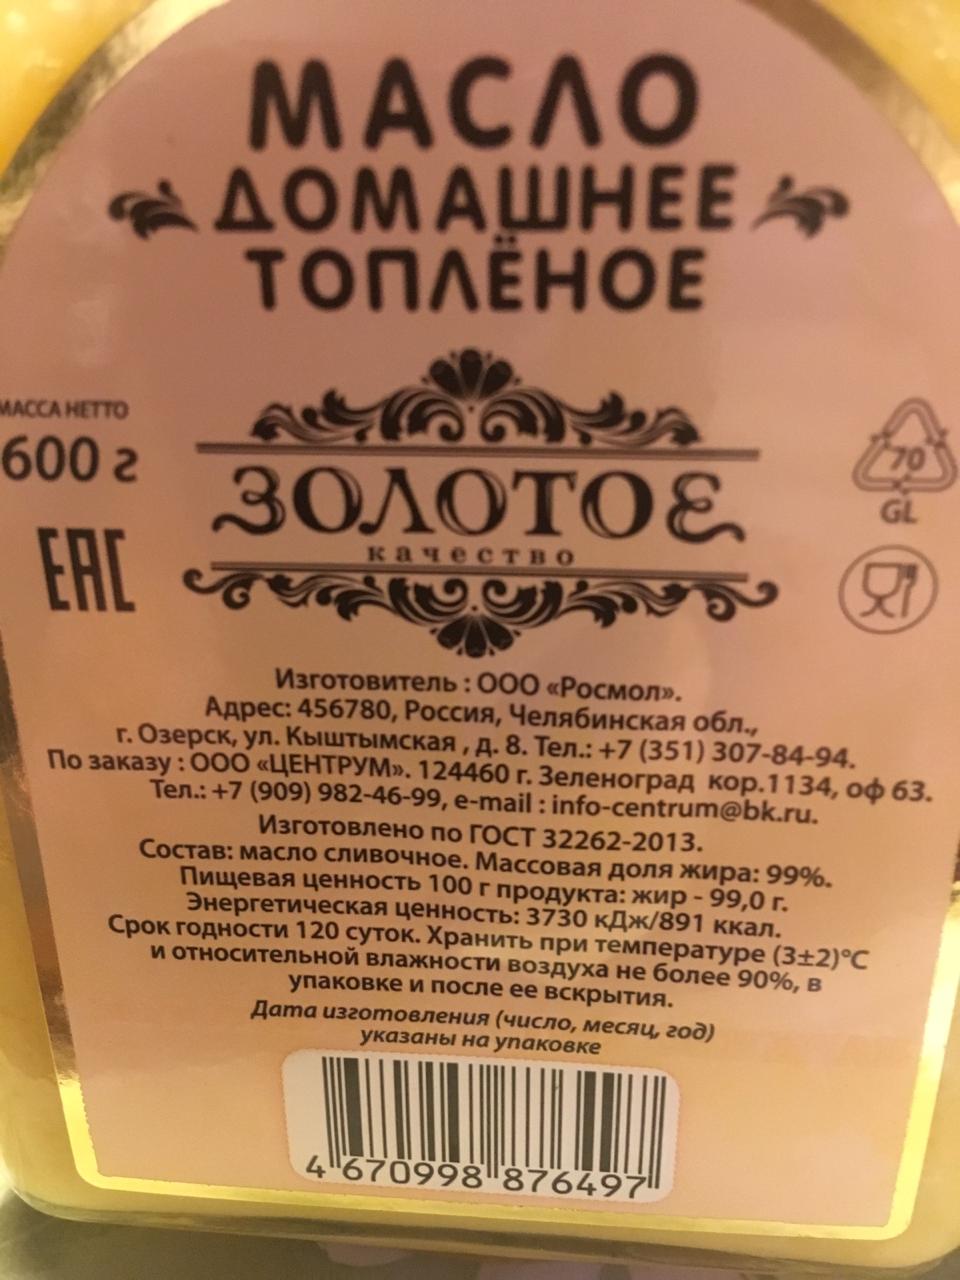 Топленое масло беларусь. Масло топленое золотое. Масло топленое белорусское. Топлёное масло белорусское золотое. Топленое масло белорусское золотое качество.